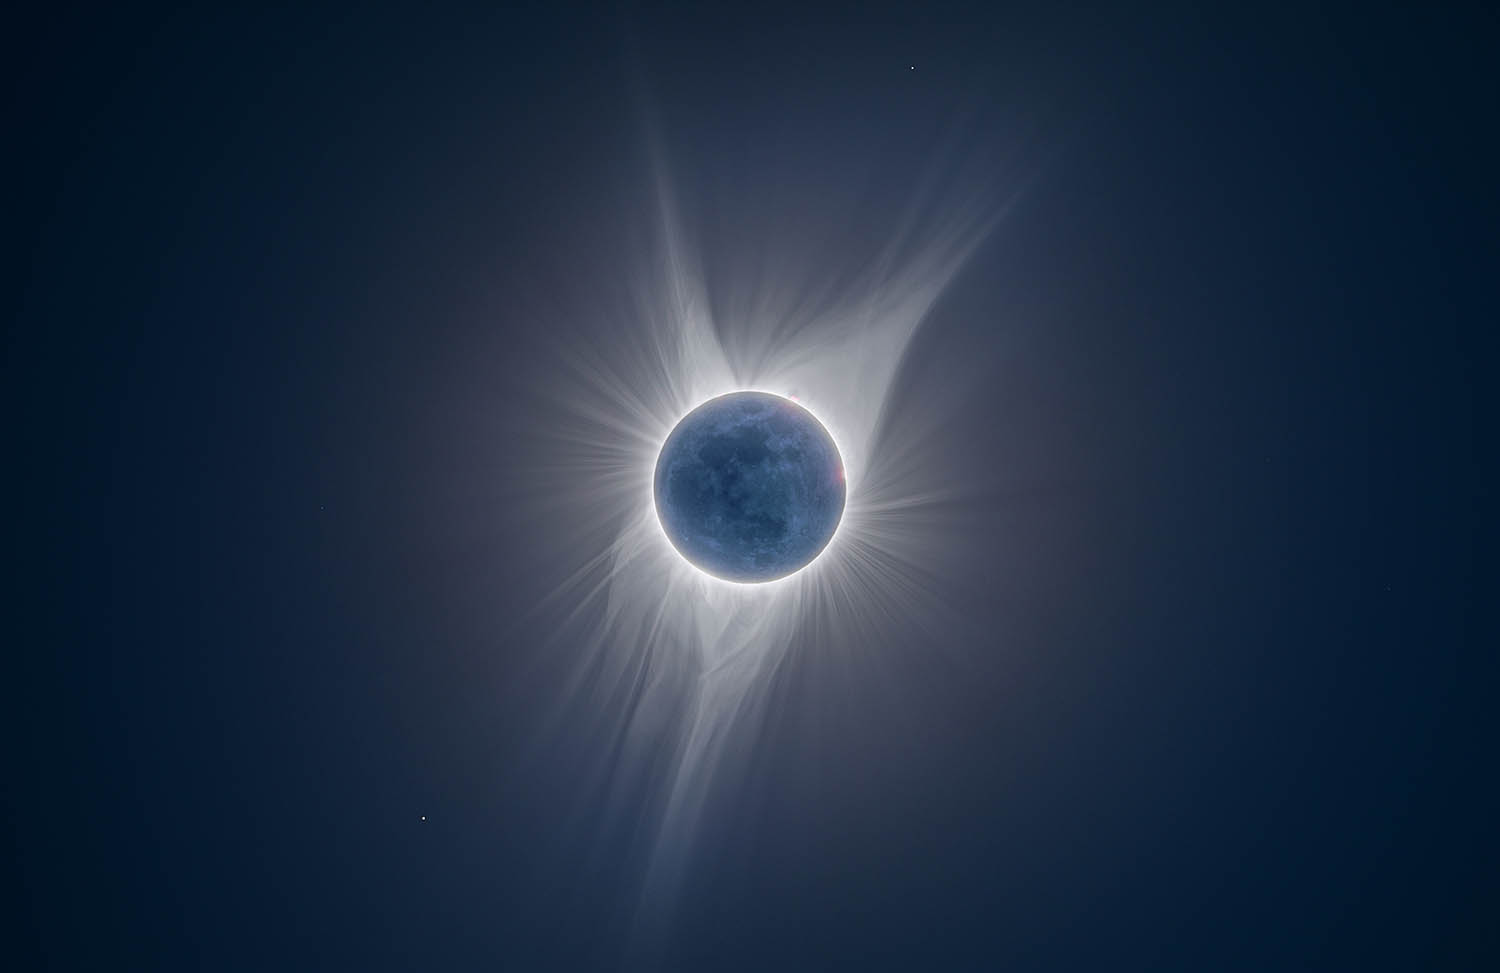 Photo of solar eclipse